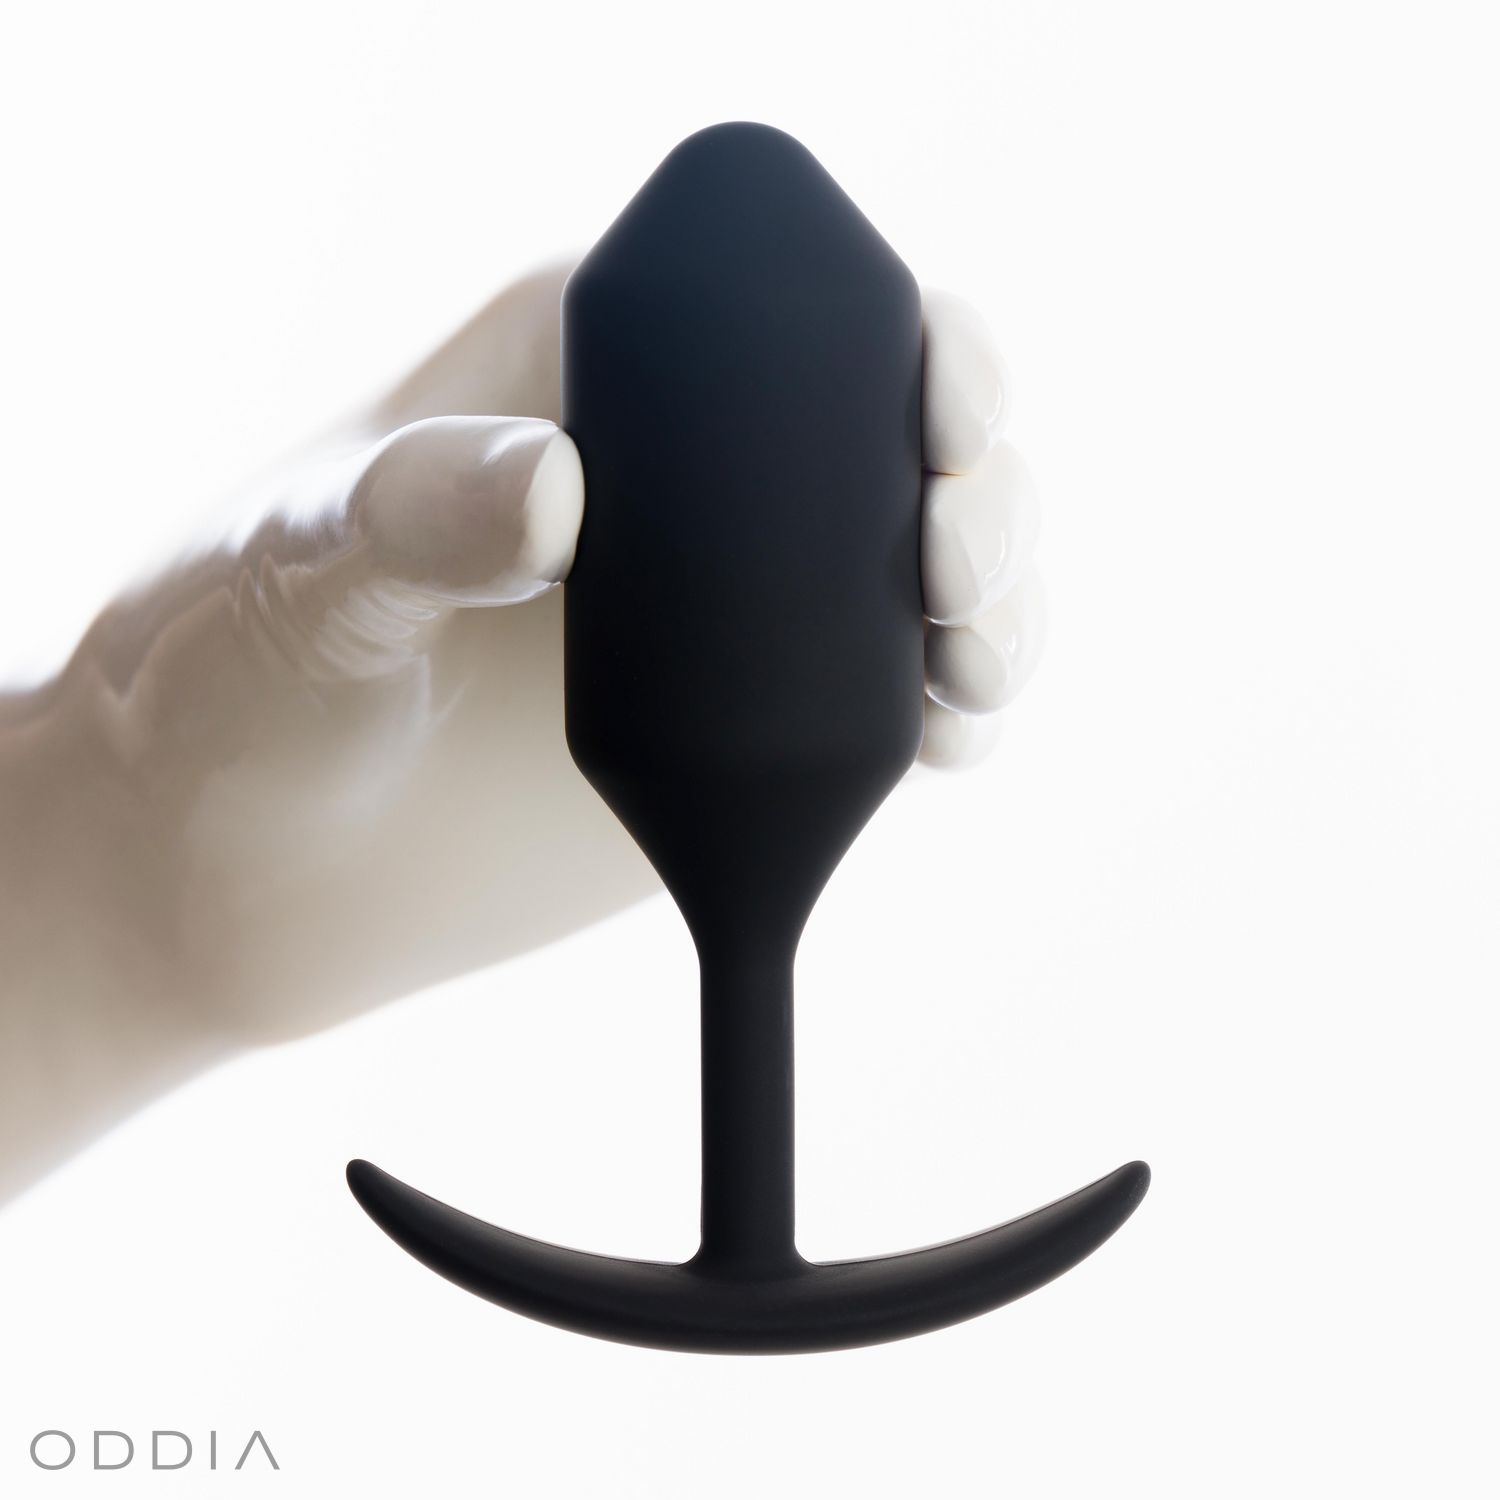 b-Vibe anal plug in black